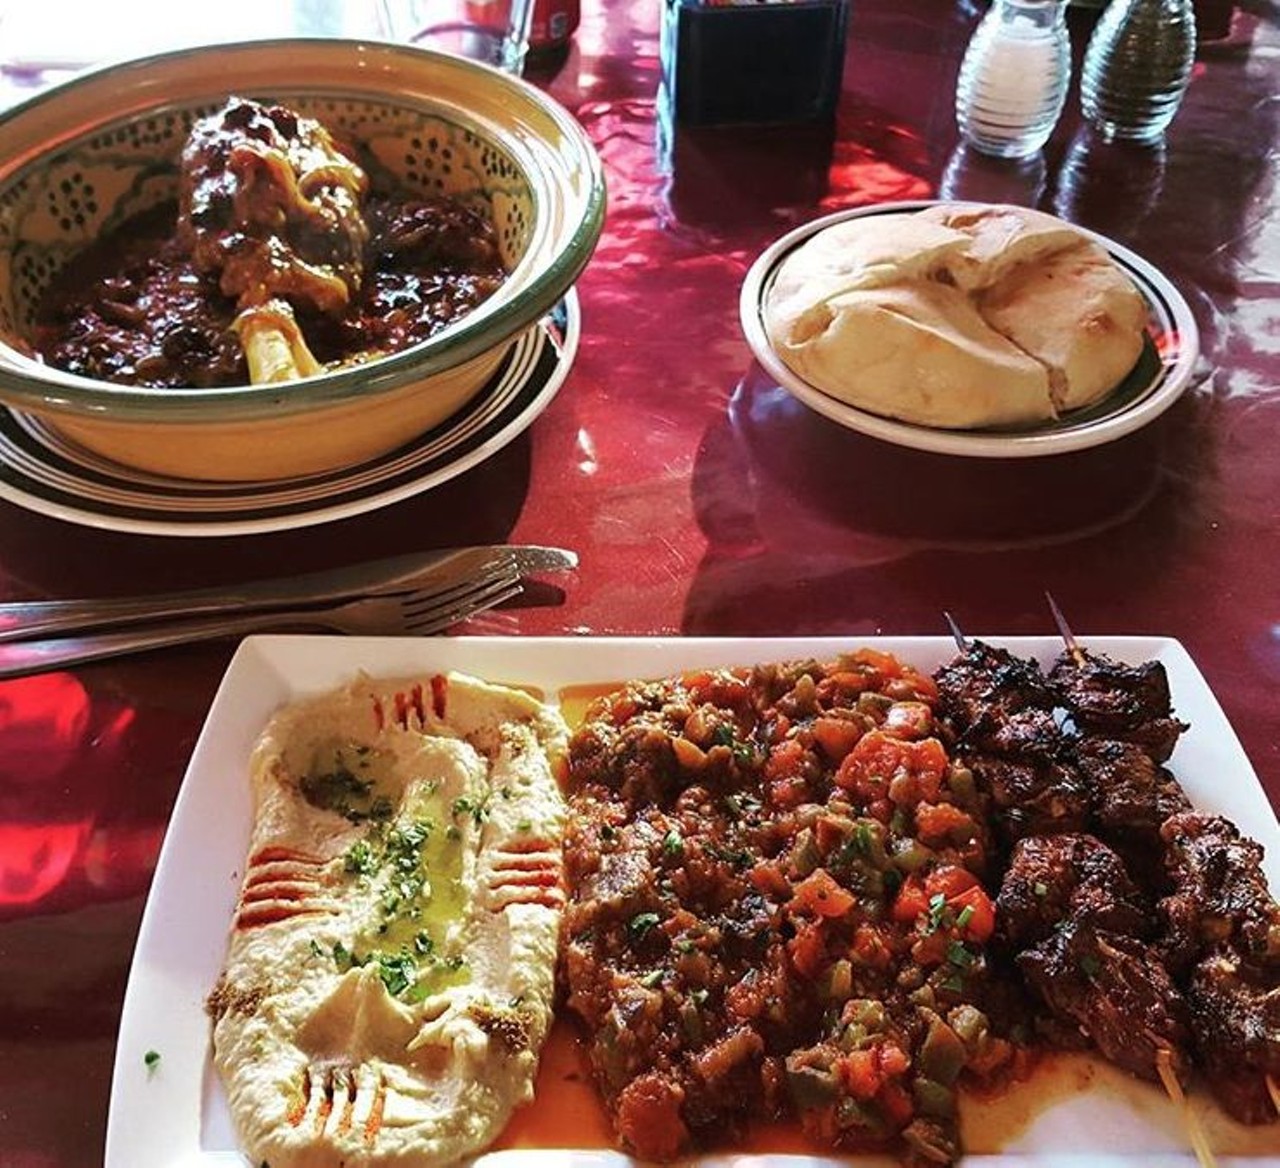 Casablanca Restaurant and Bakery  
4153 W. Vine St., Kissimmee
This is quintessential Moroccan cuisine. Expect plenty of hummus, lamb and artichokes. 
Photo via schwartz87/ Instagram